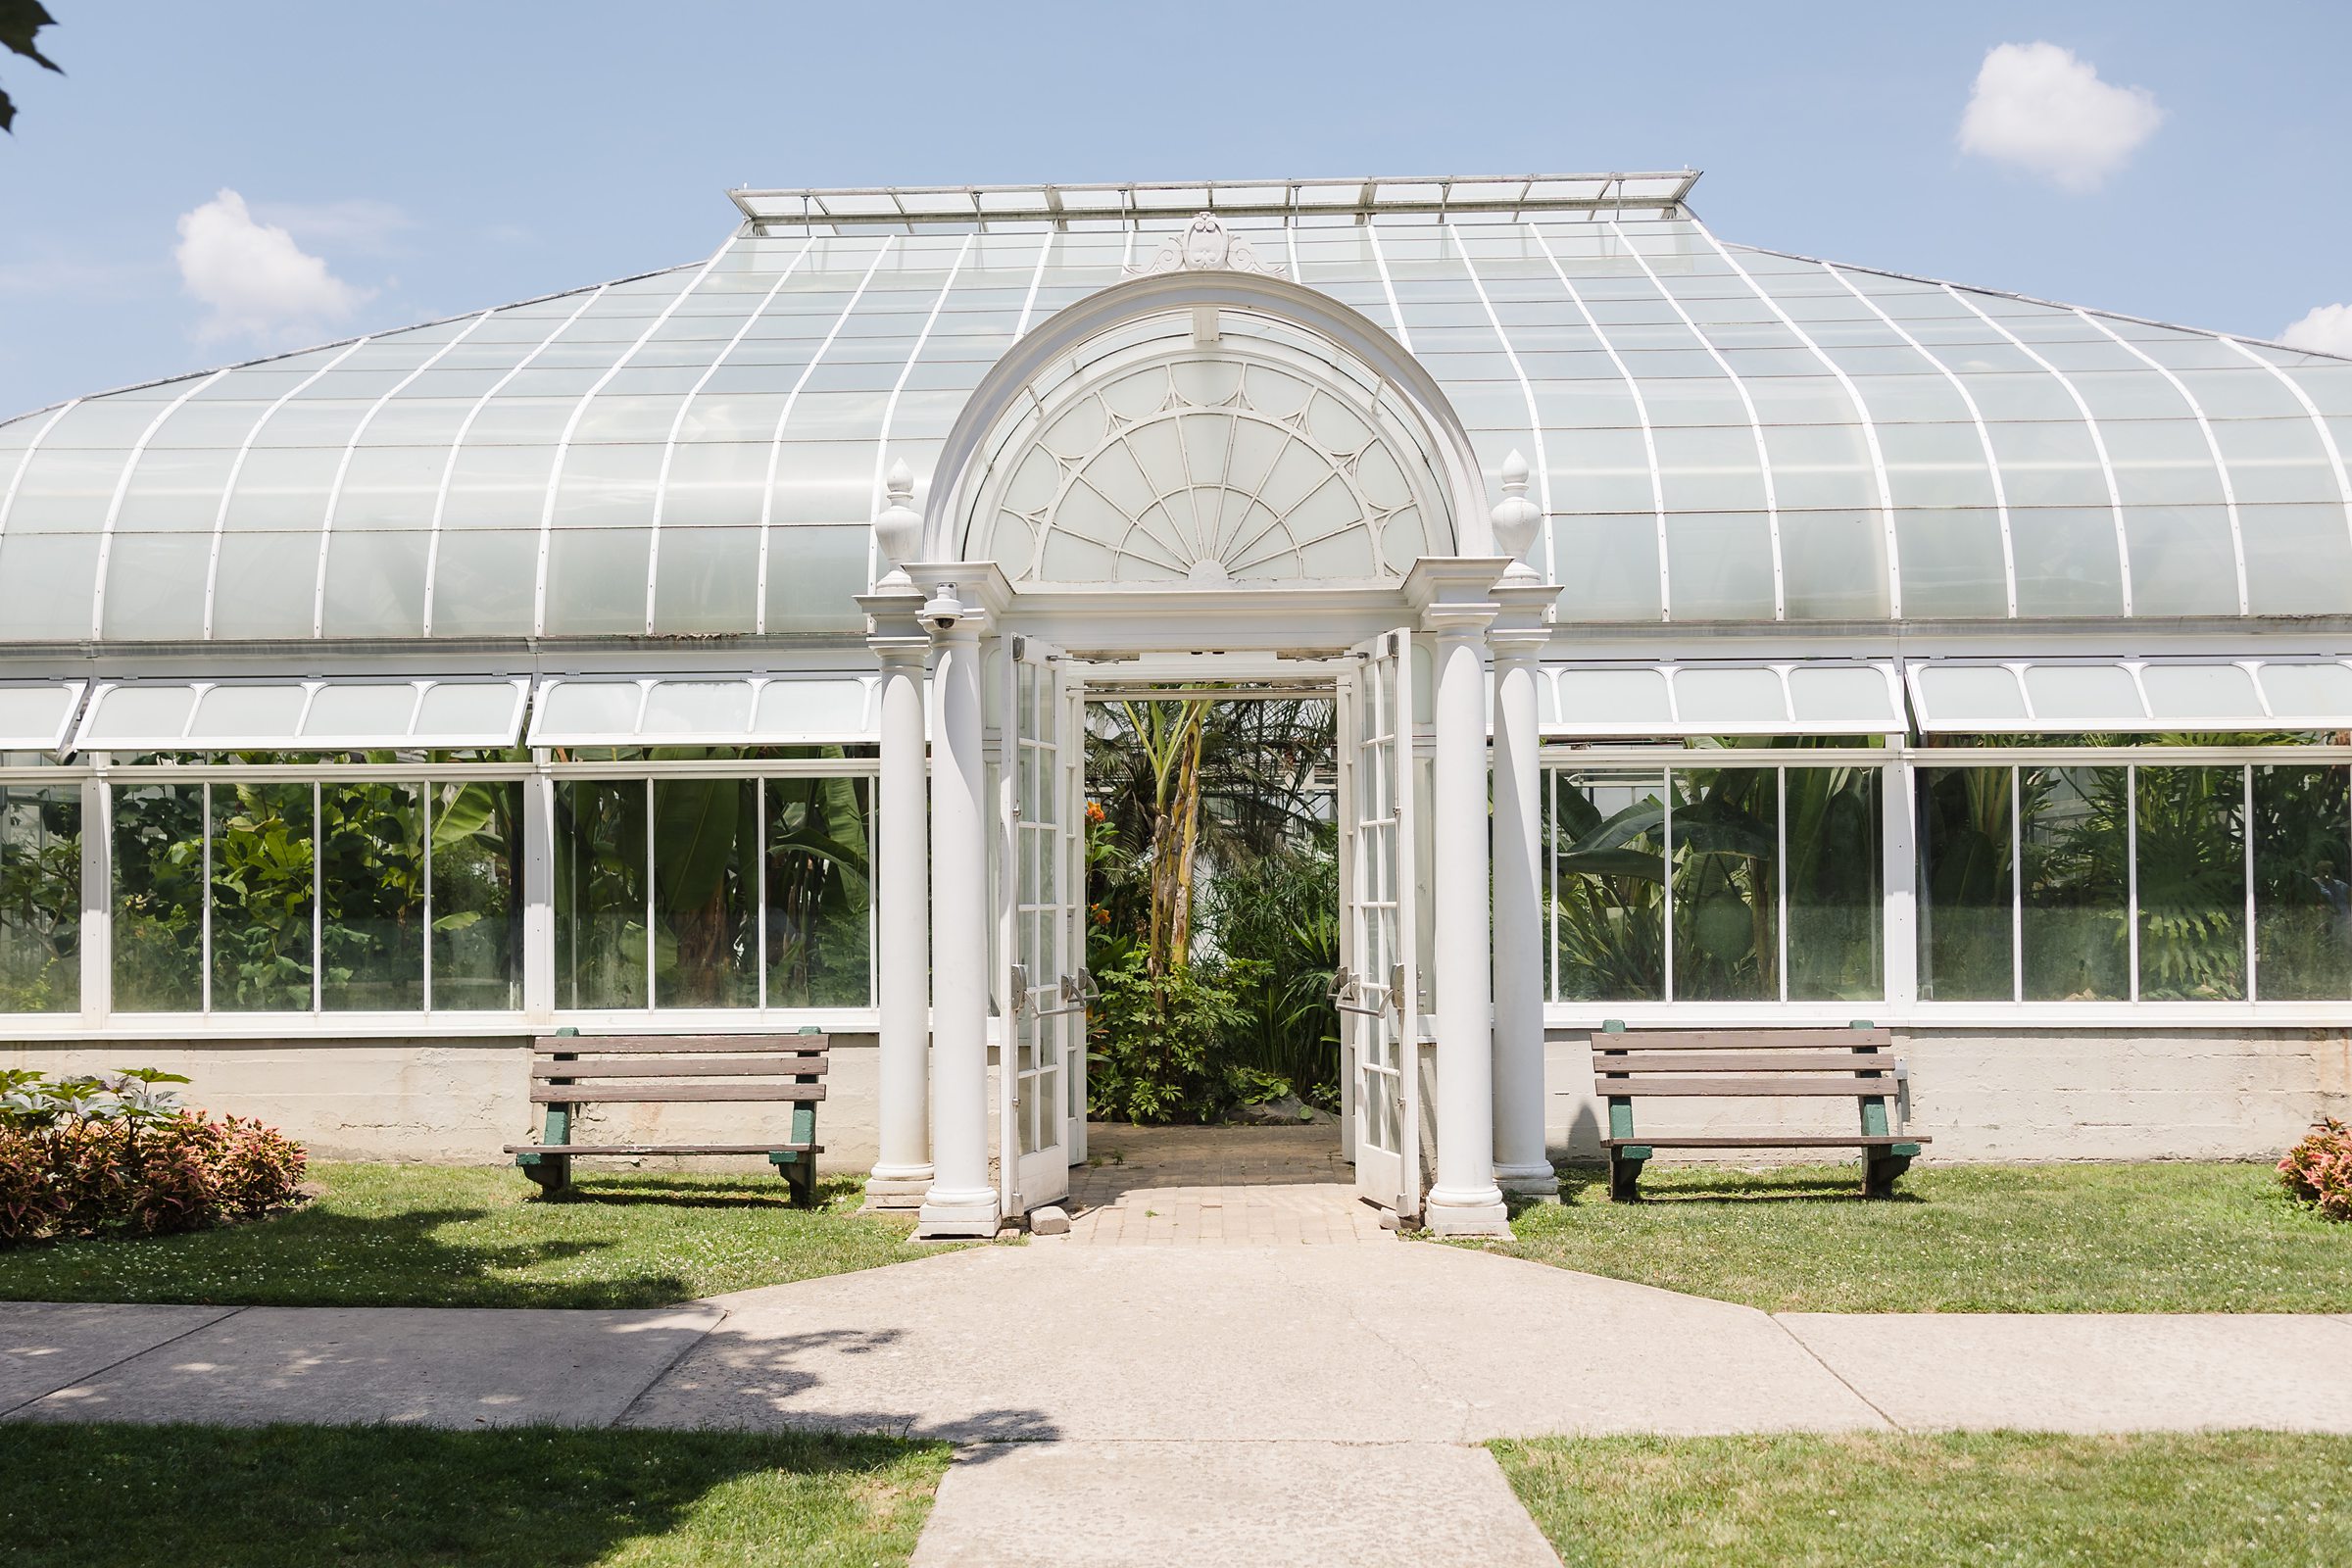 The Bird Haven Greenhouse & Conservatory in Joliet, Illinois